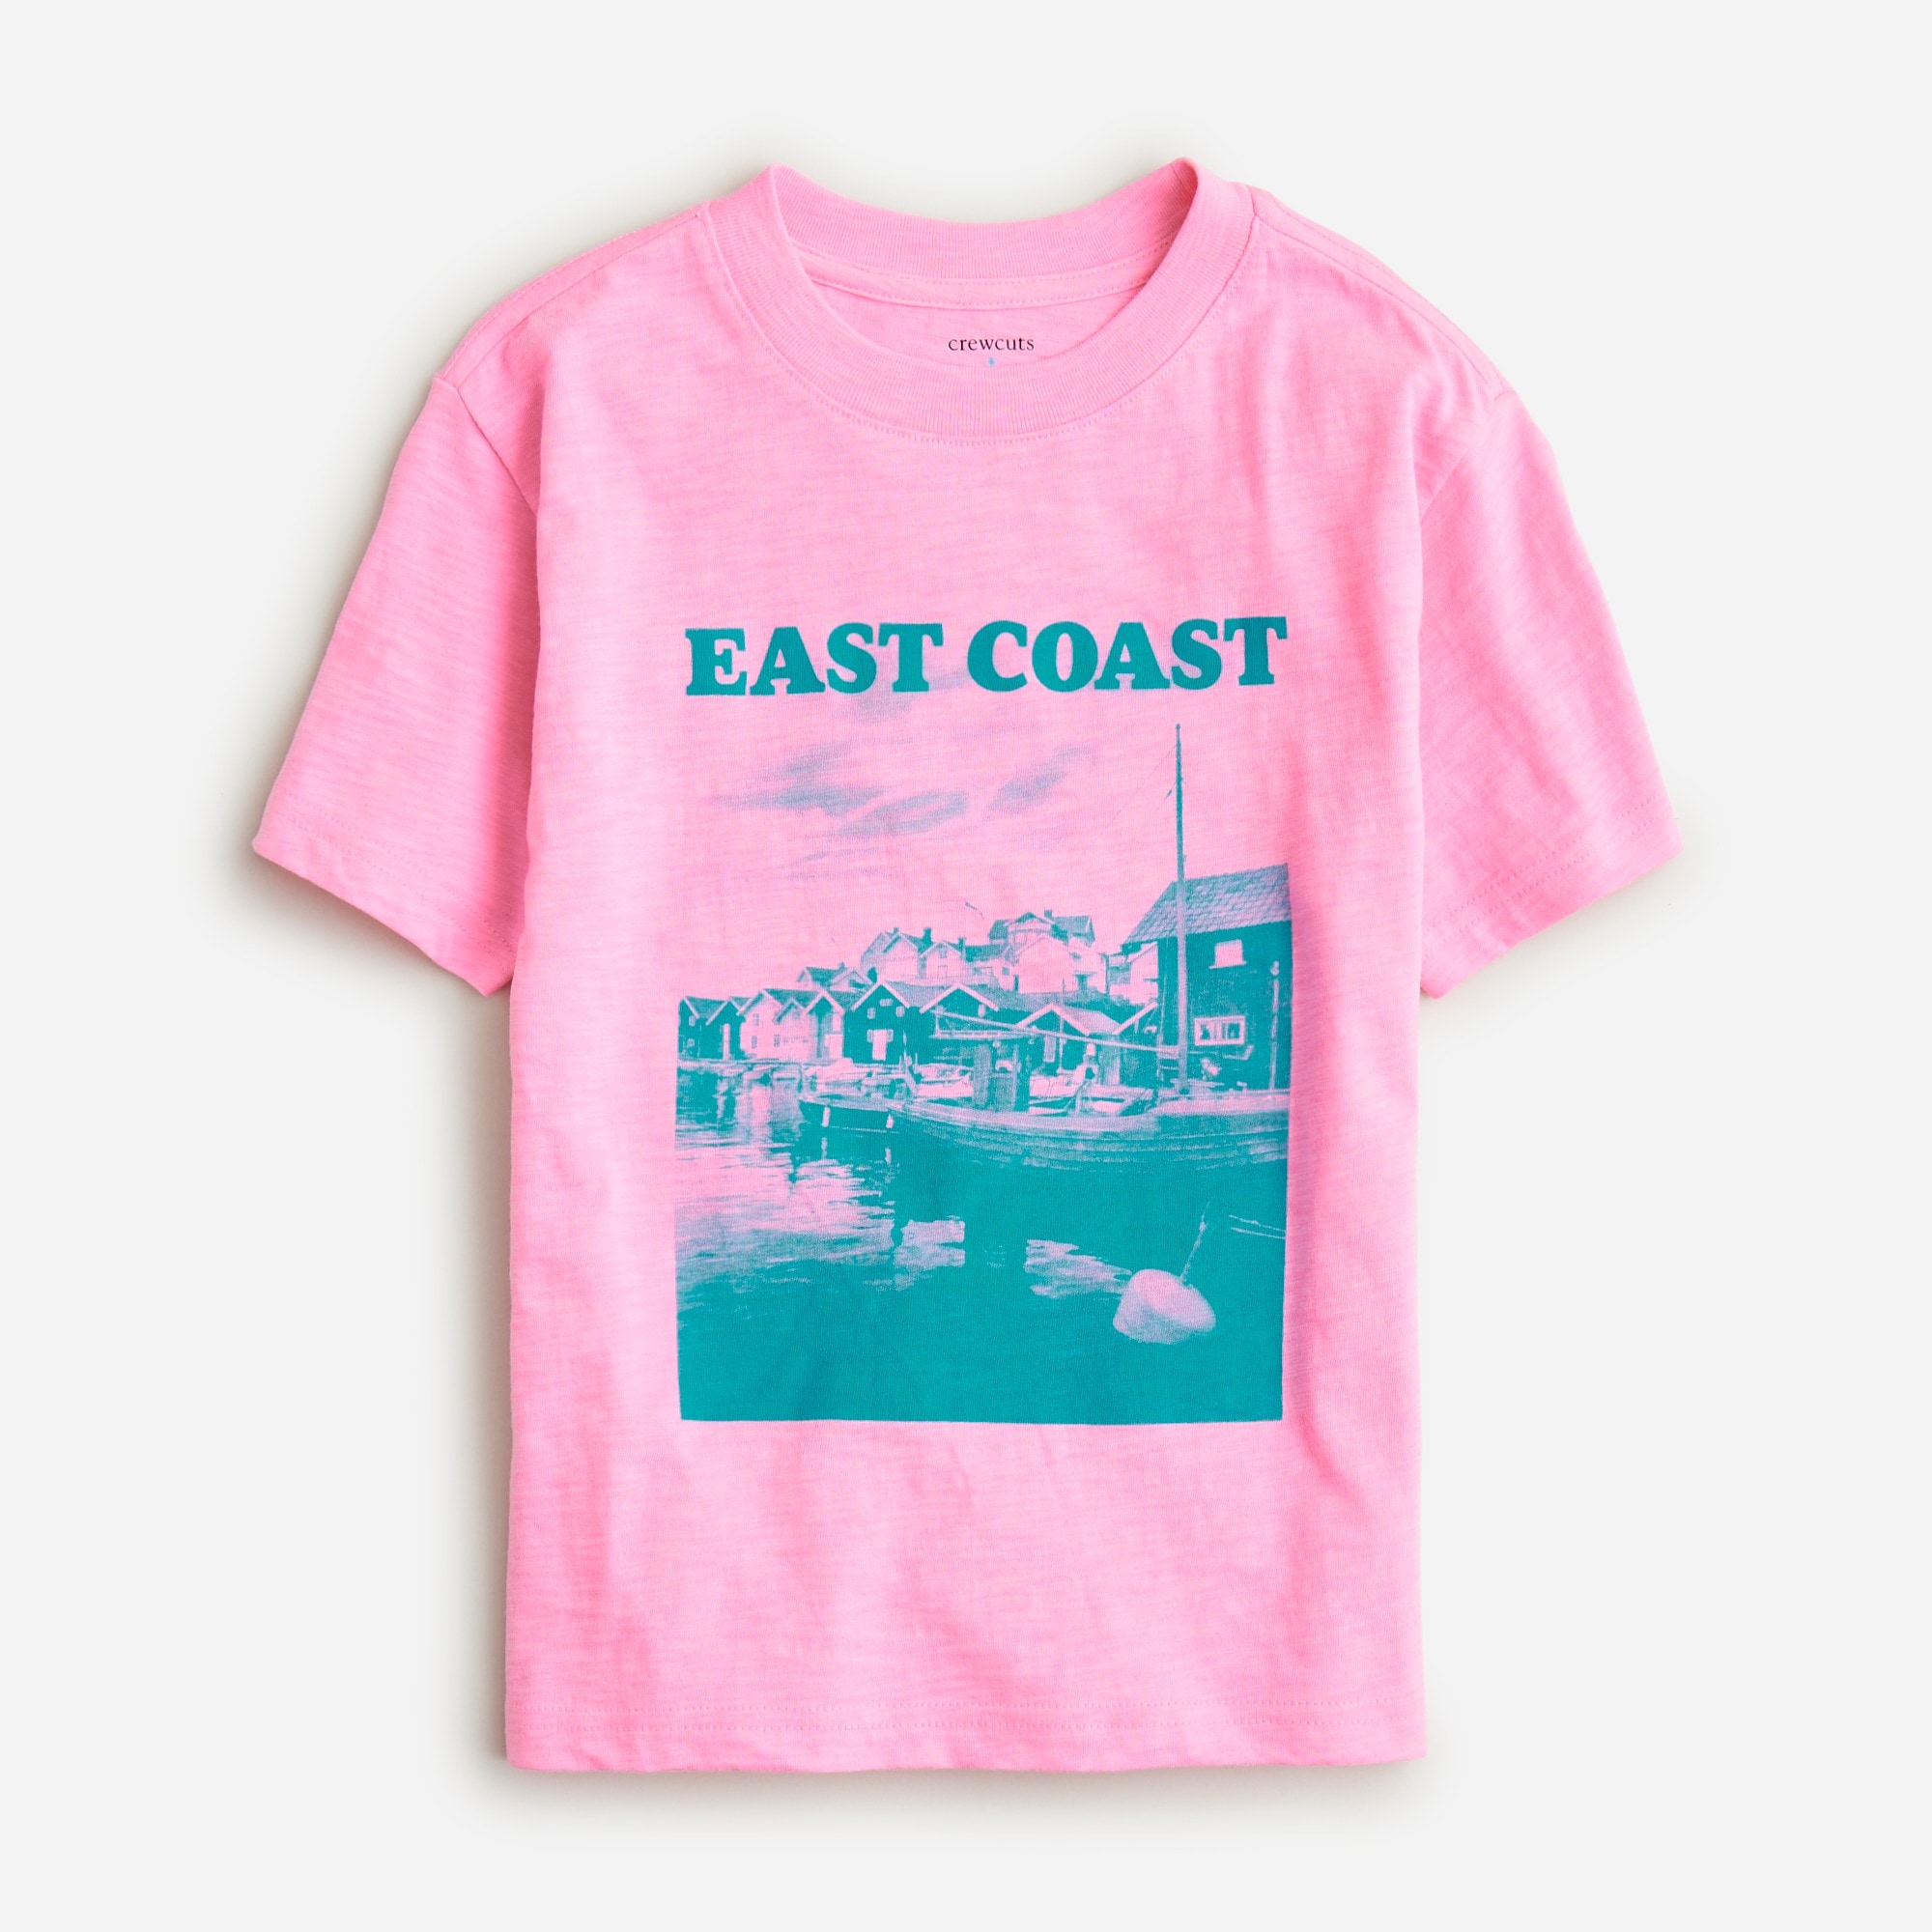 Jcrew Kids East Coast graphic T-shirt